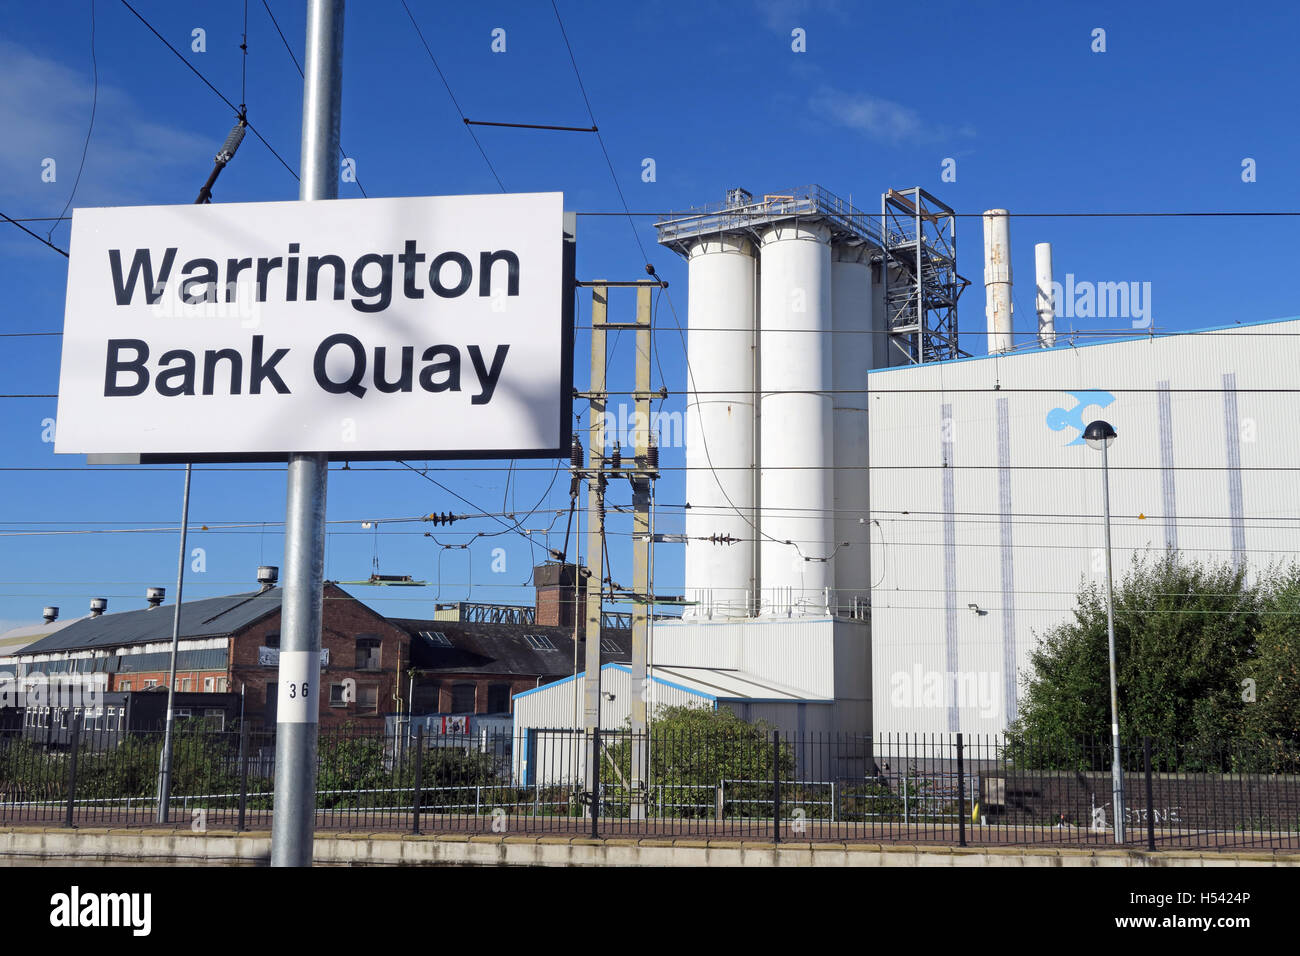 La gare ferroviaire de Warrington Bank Quay WCML, Cheshire, Angleterre, Royaume-Uni -sign & Crossfields factory Banque D'Images